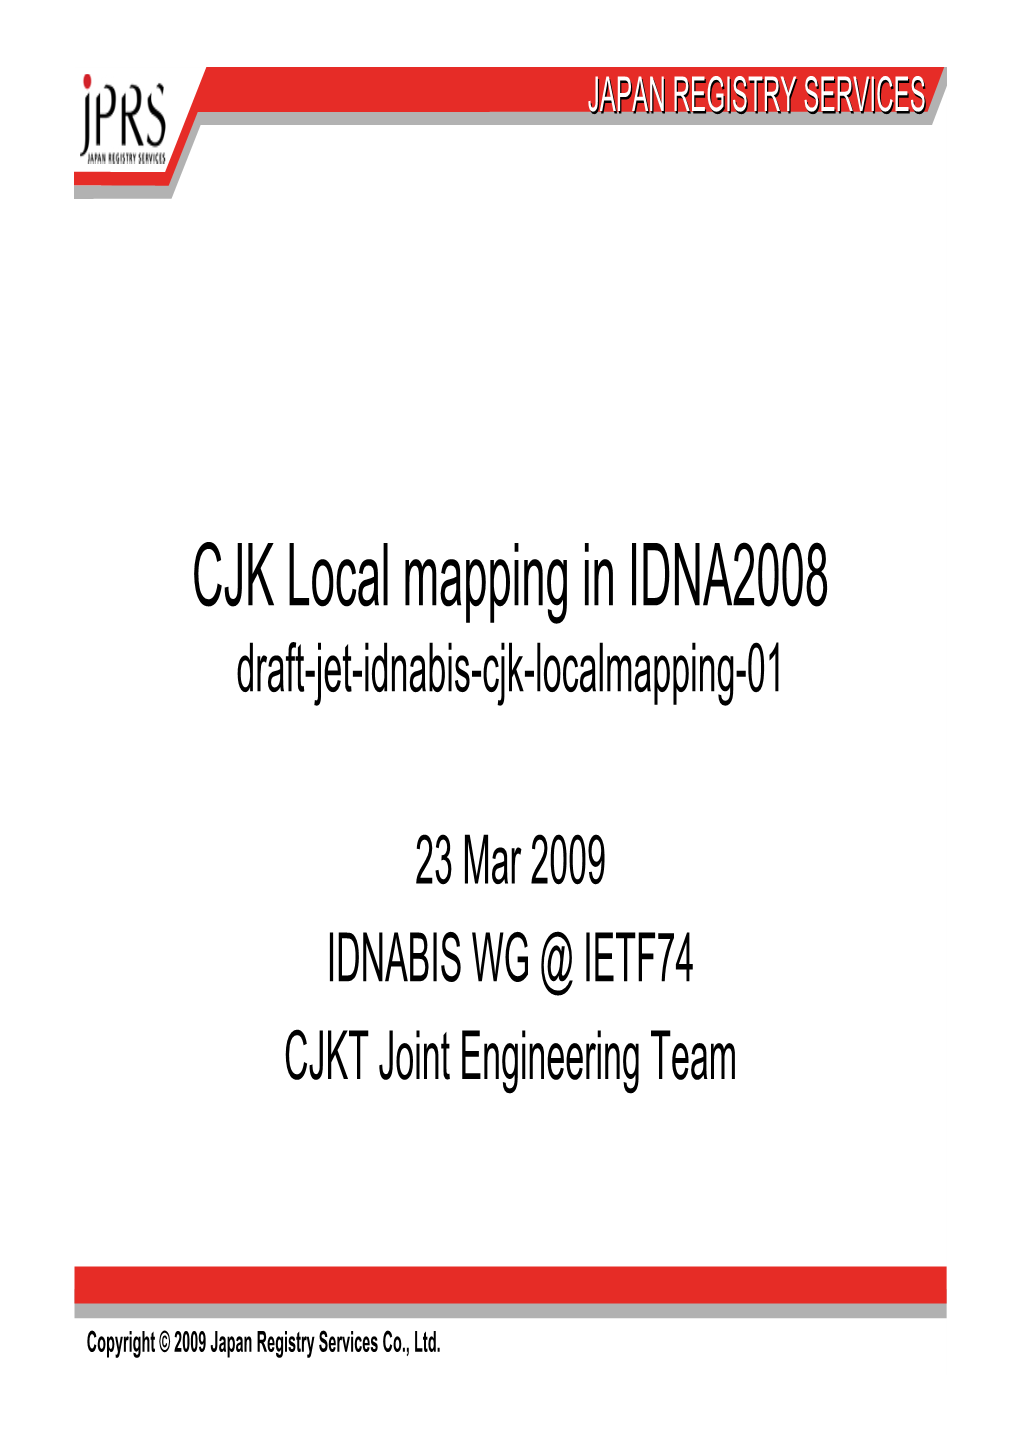 CJK Local Mapping in IDNA2008 Draft-Jet-Idnabis-Cjk-Localmapping-01